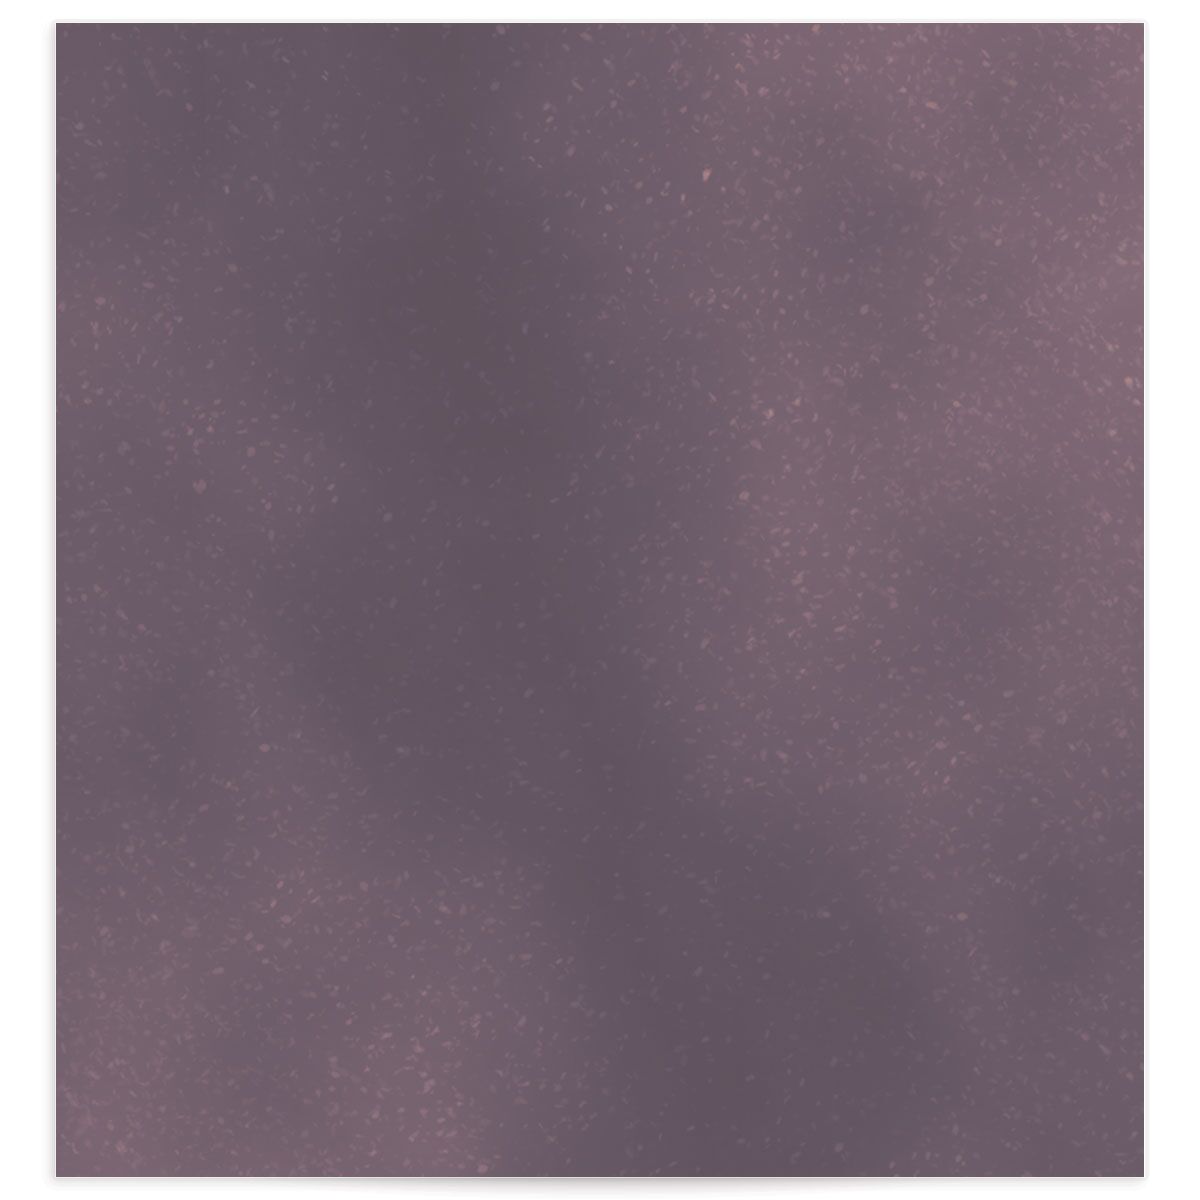 Shimmer Dust Standard Envelope Liners front in purple